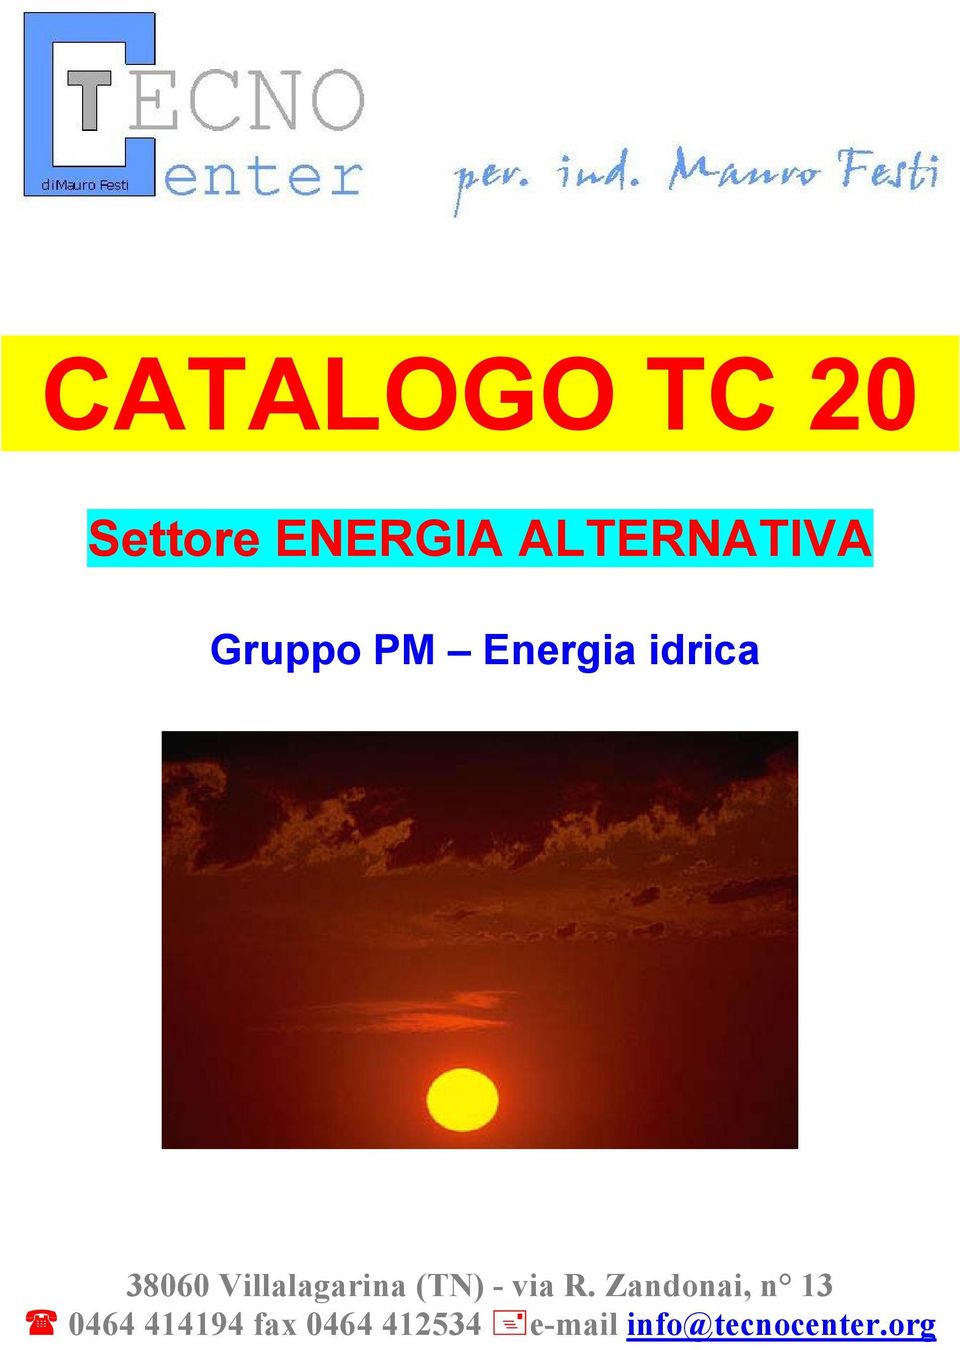 Gruppo PM Energia idrica